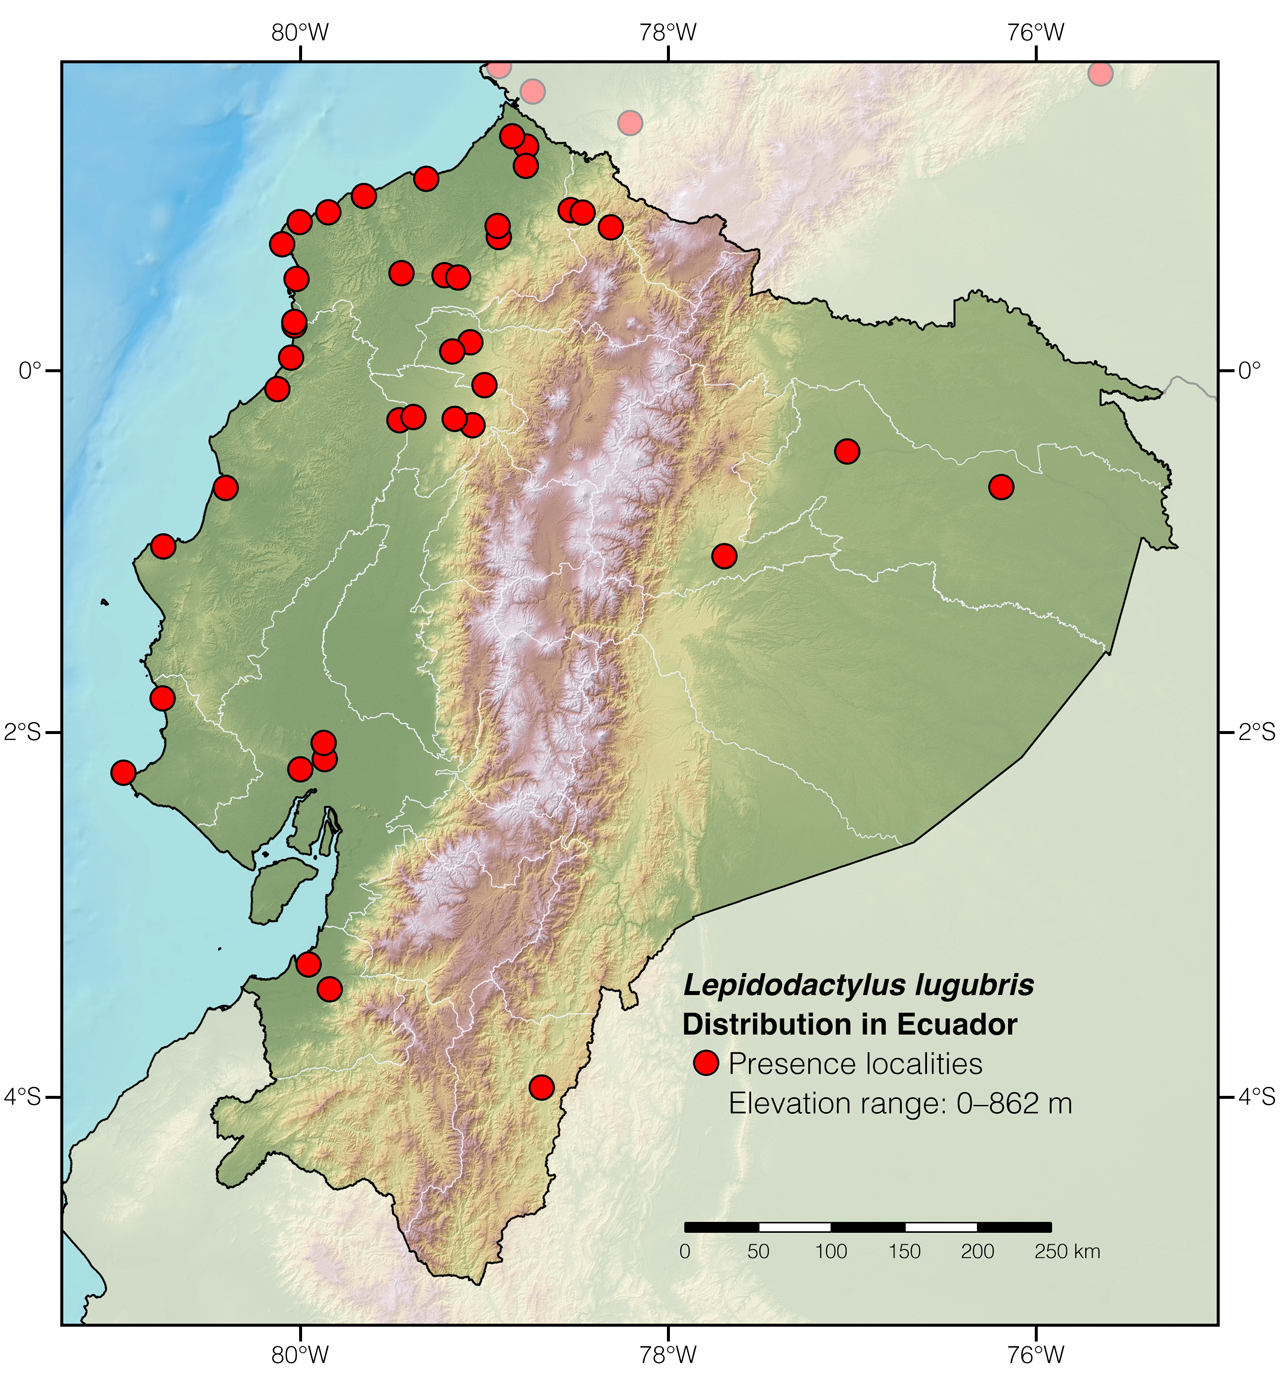 Distribution of Lepidodactylus lugubris in Ecuador